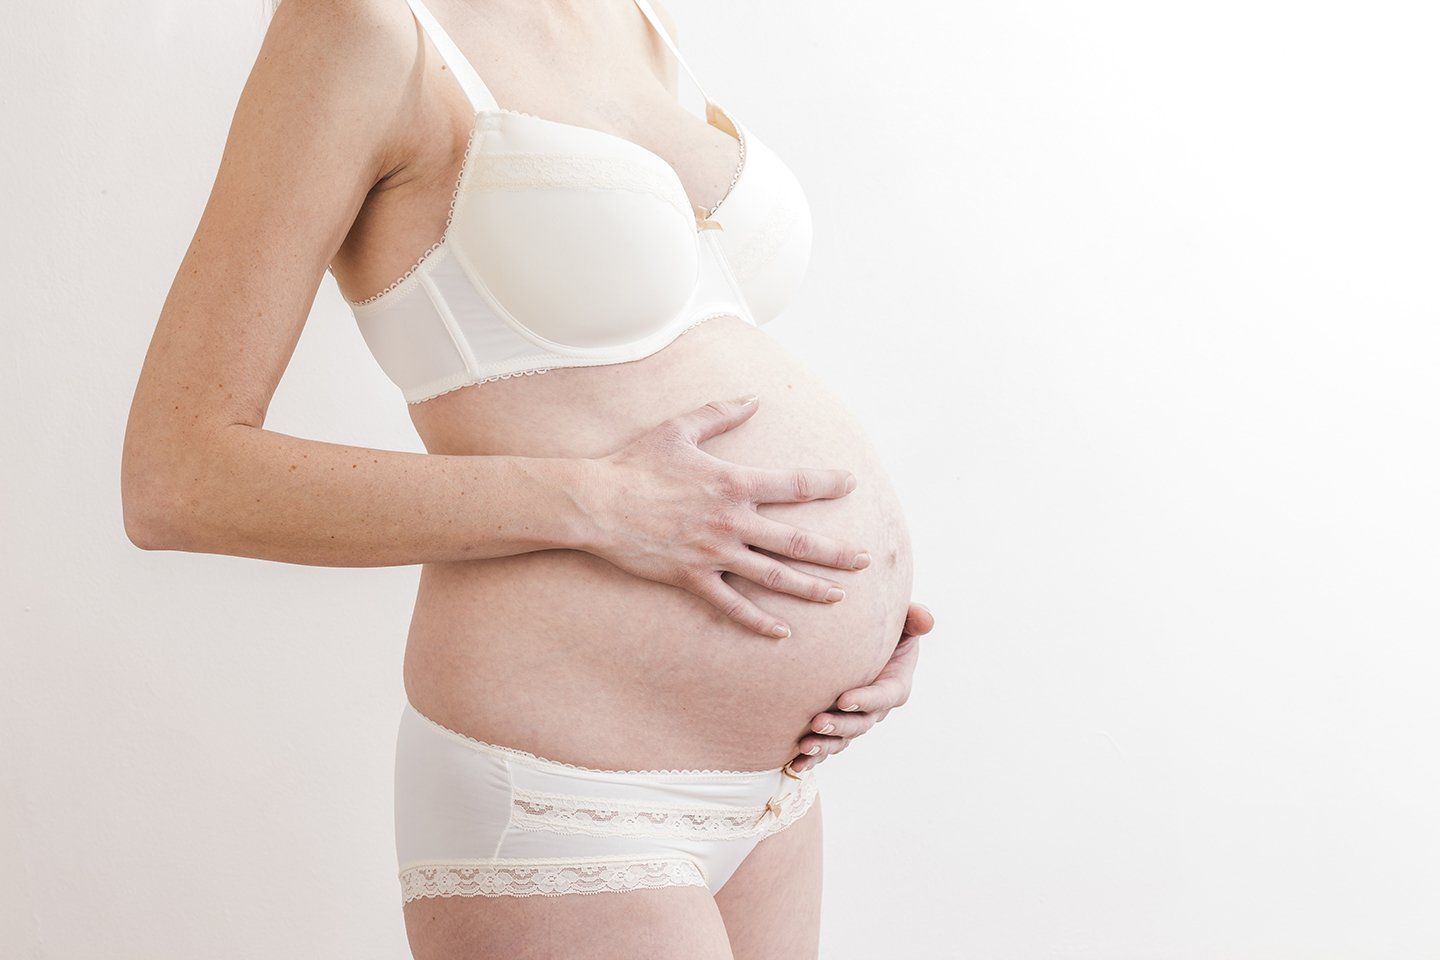 Donna incinta con biancheria intima apposita